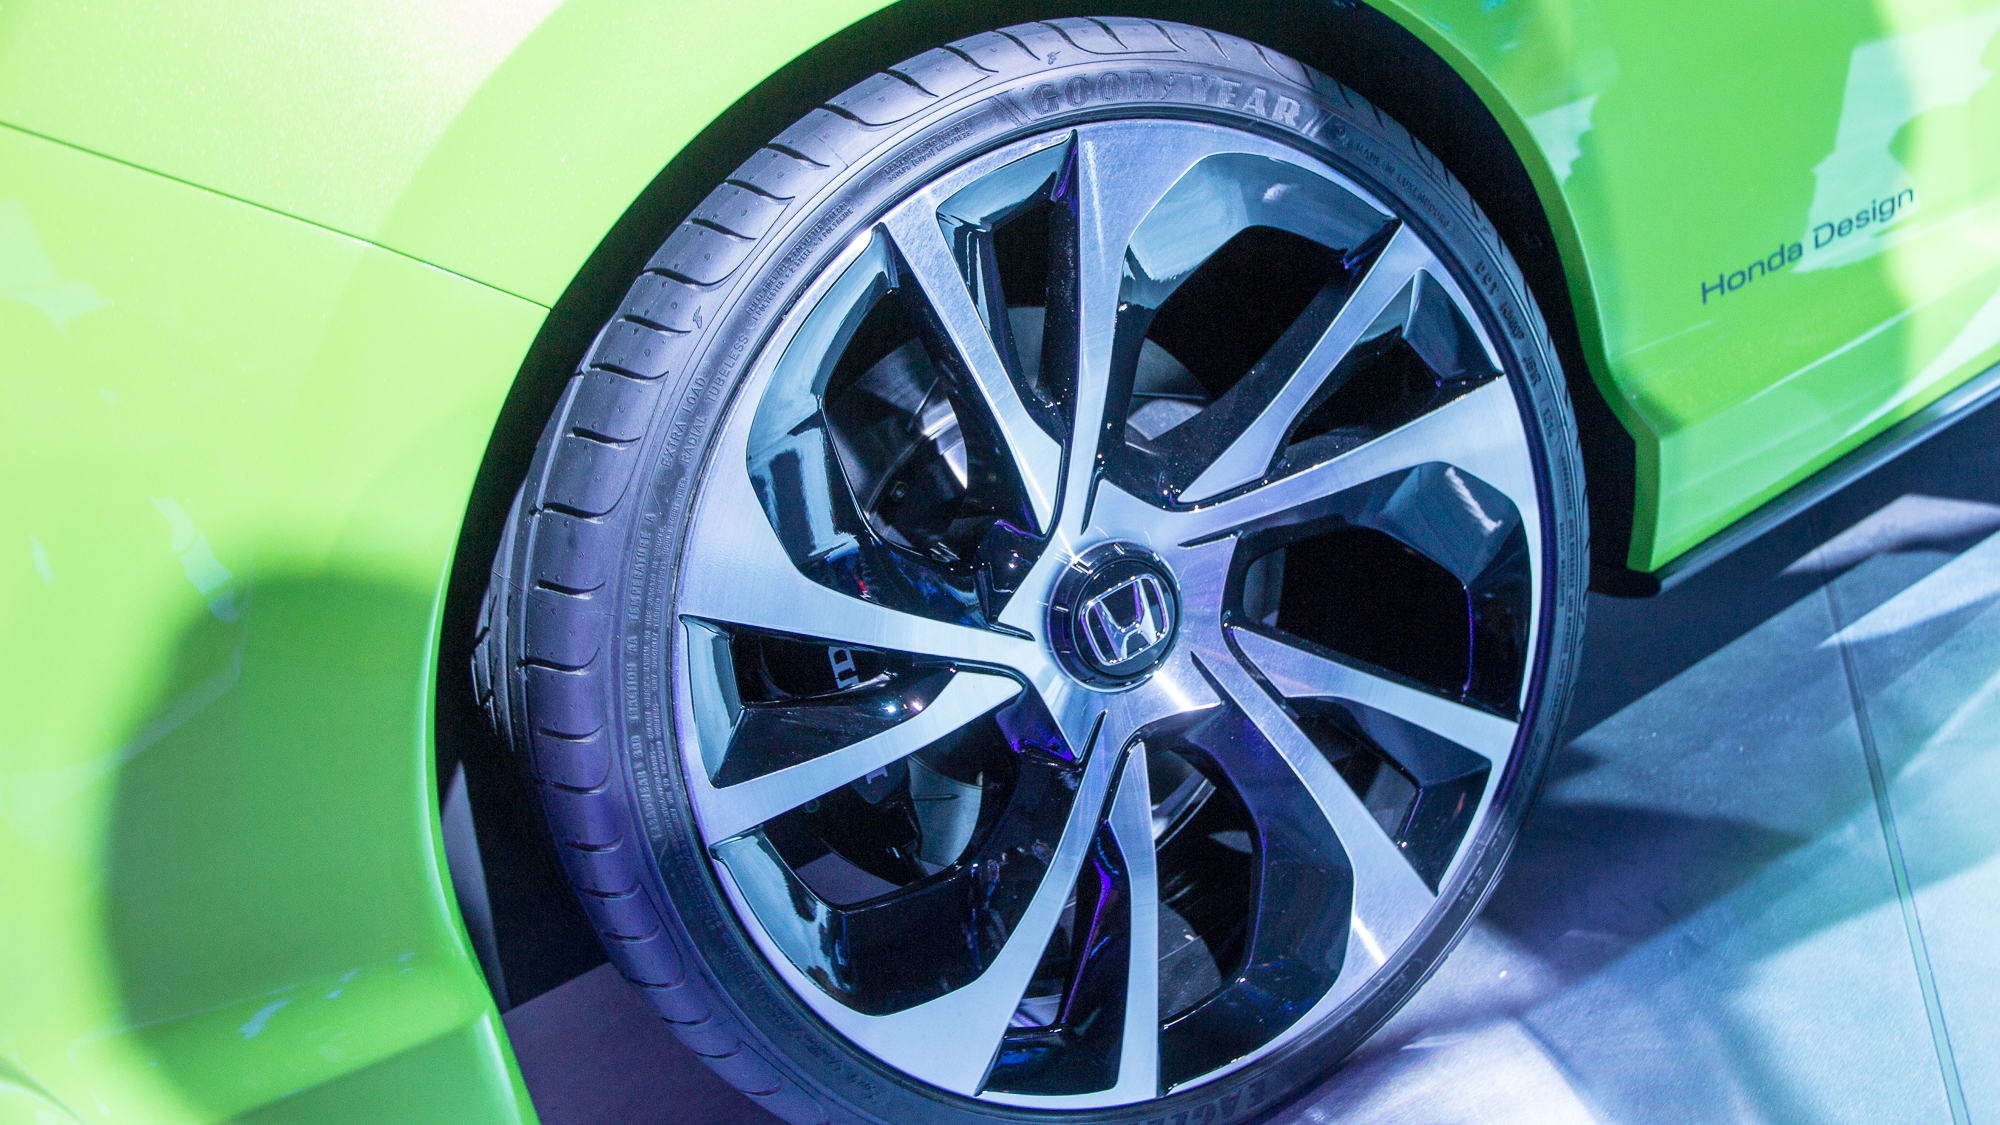 Honda Civic Concept Live Shots, 2015 New York Auto Show